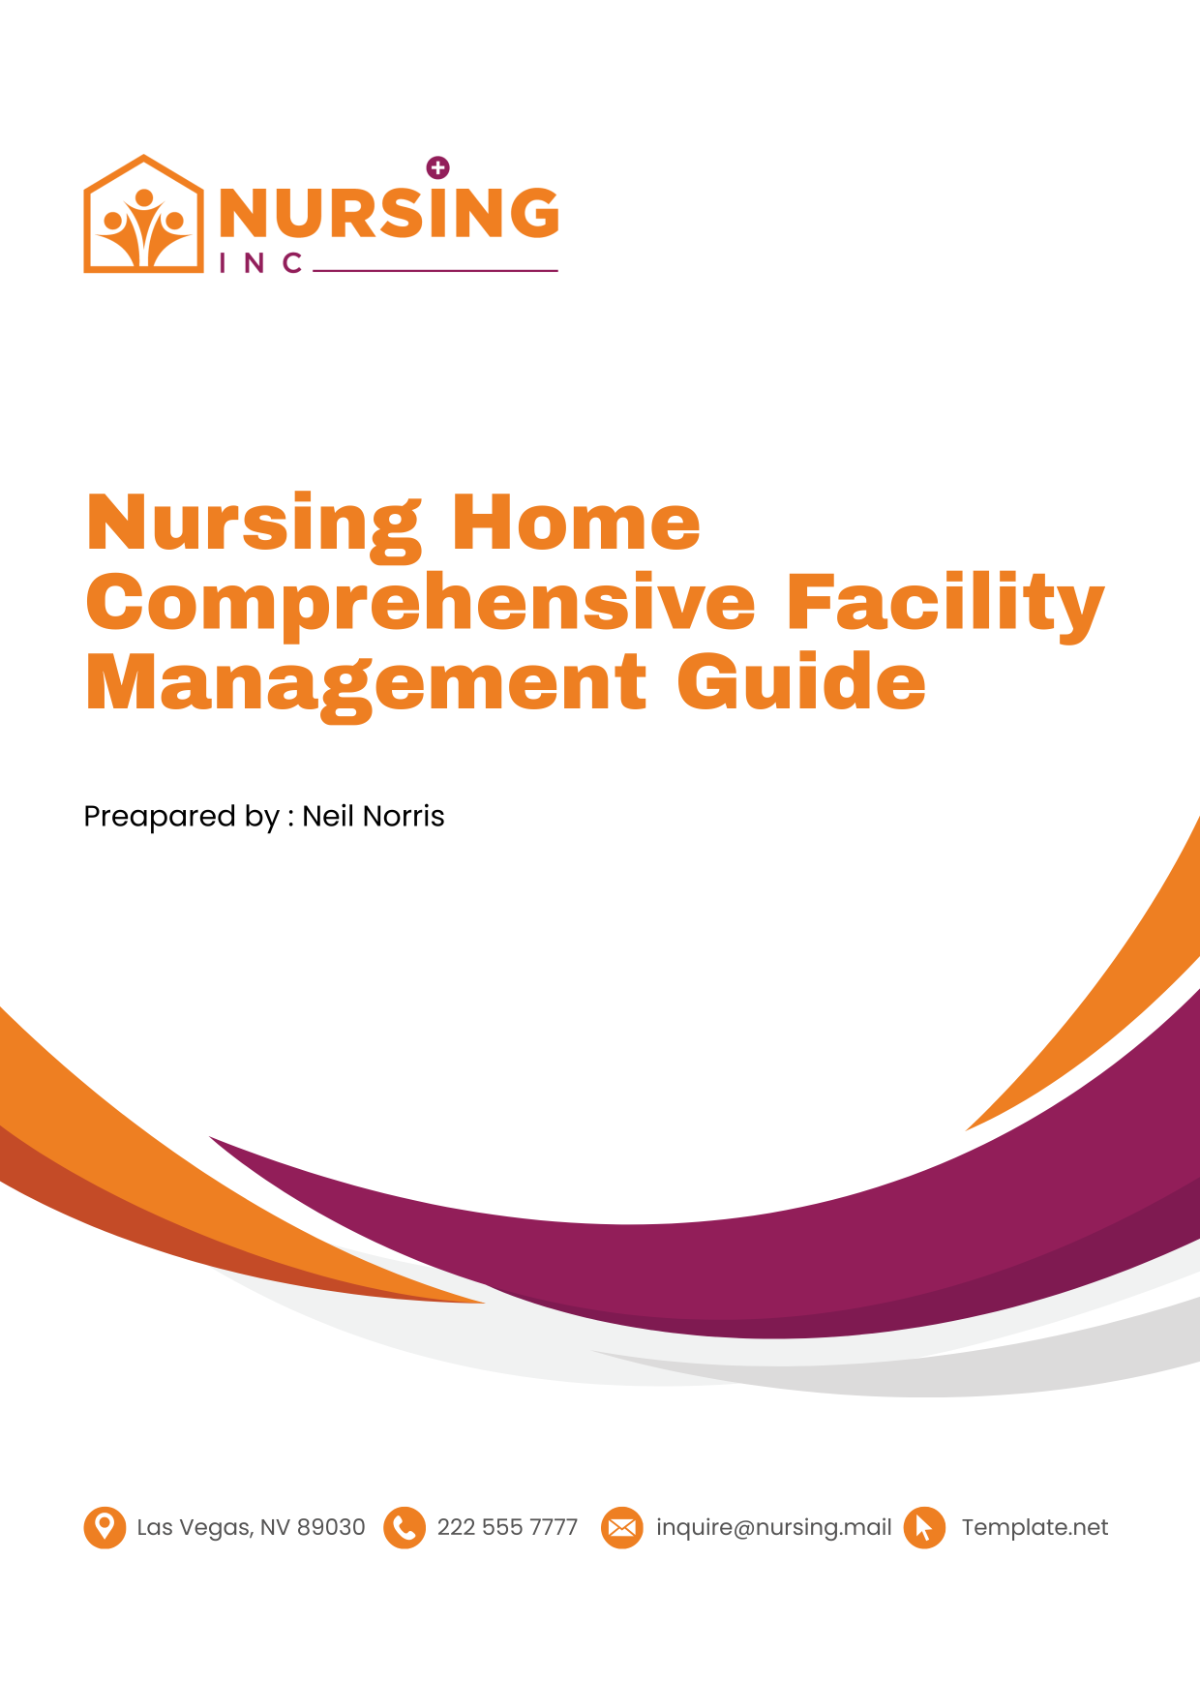 Nursing Home Comprehensive Facility Management Guide Template